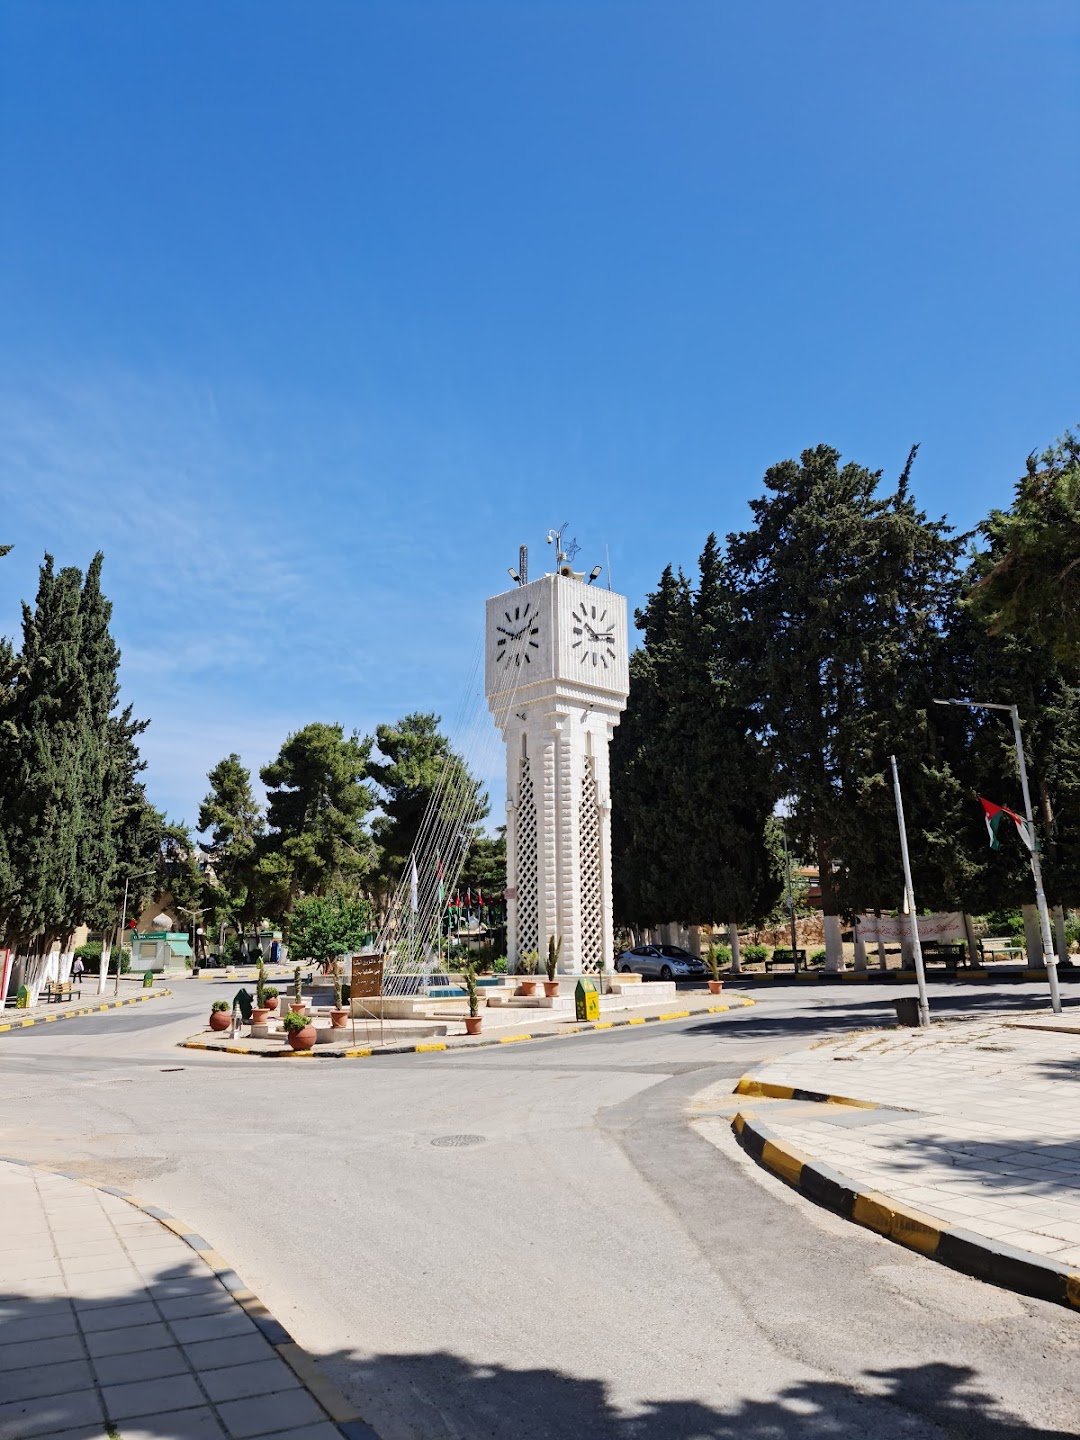 The University of Jordan